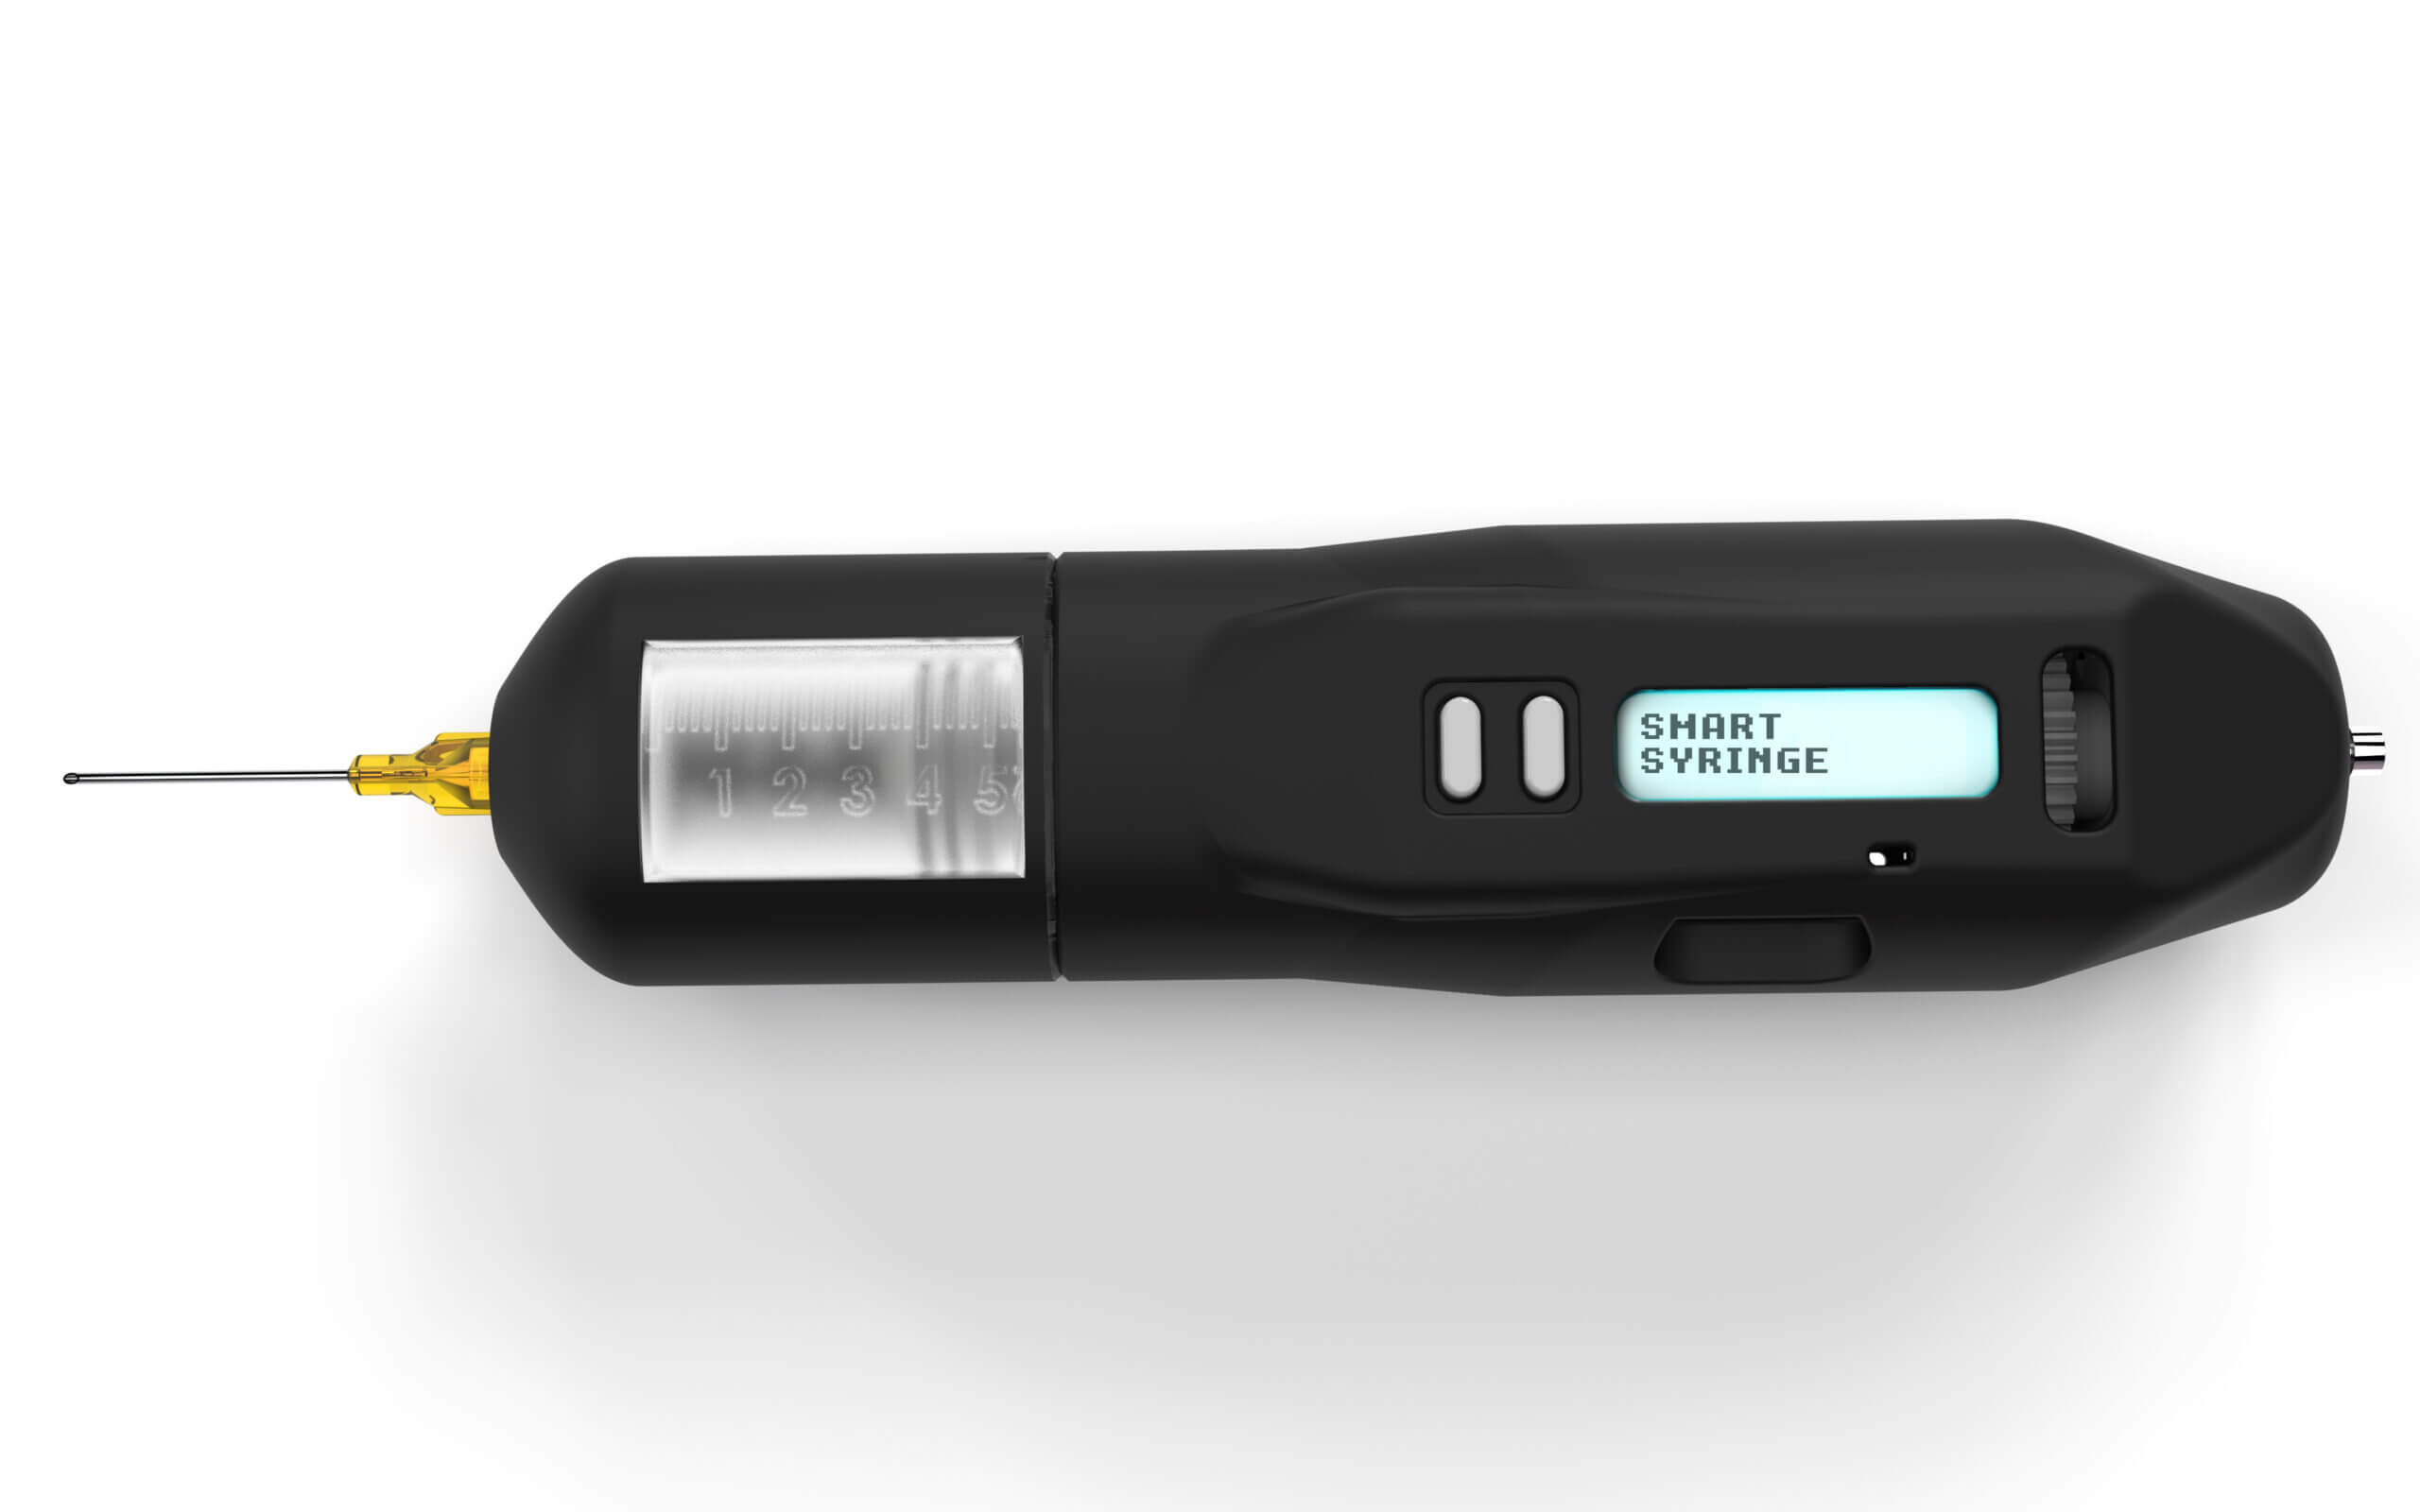 Smart Syringe image medical device development